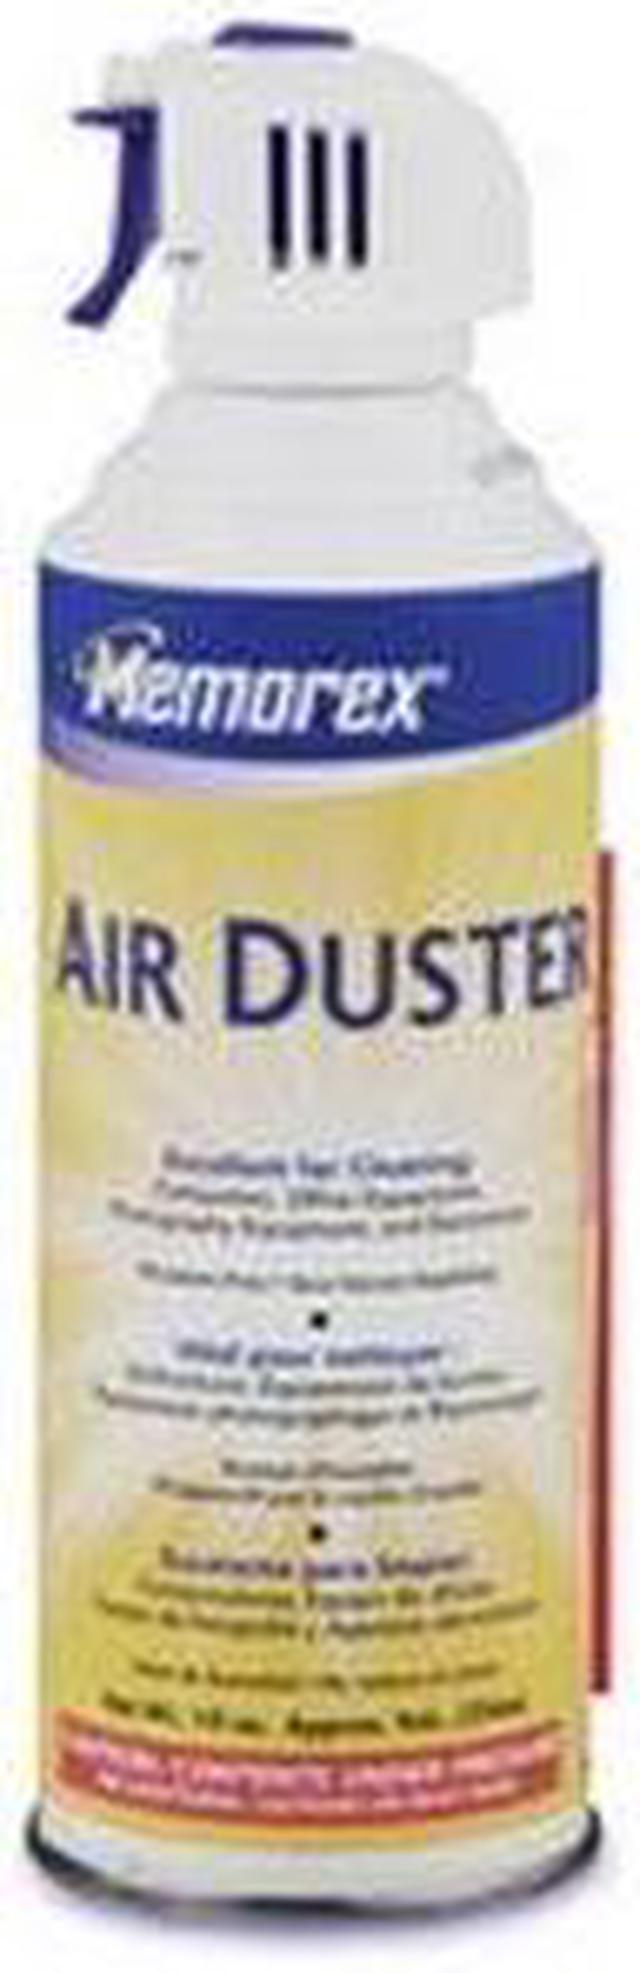 Memorex Air Duster - Imation